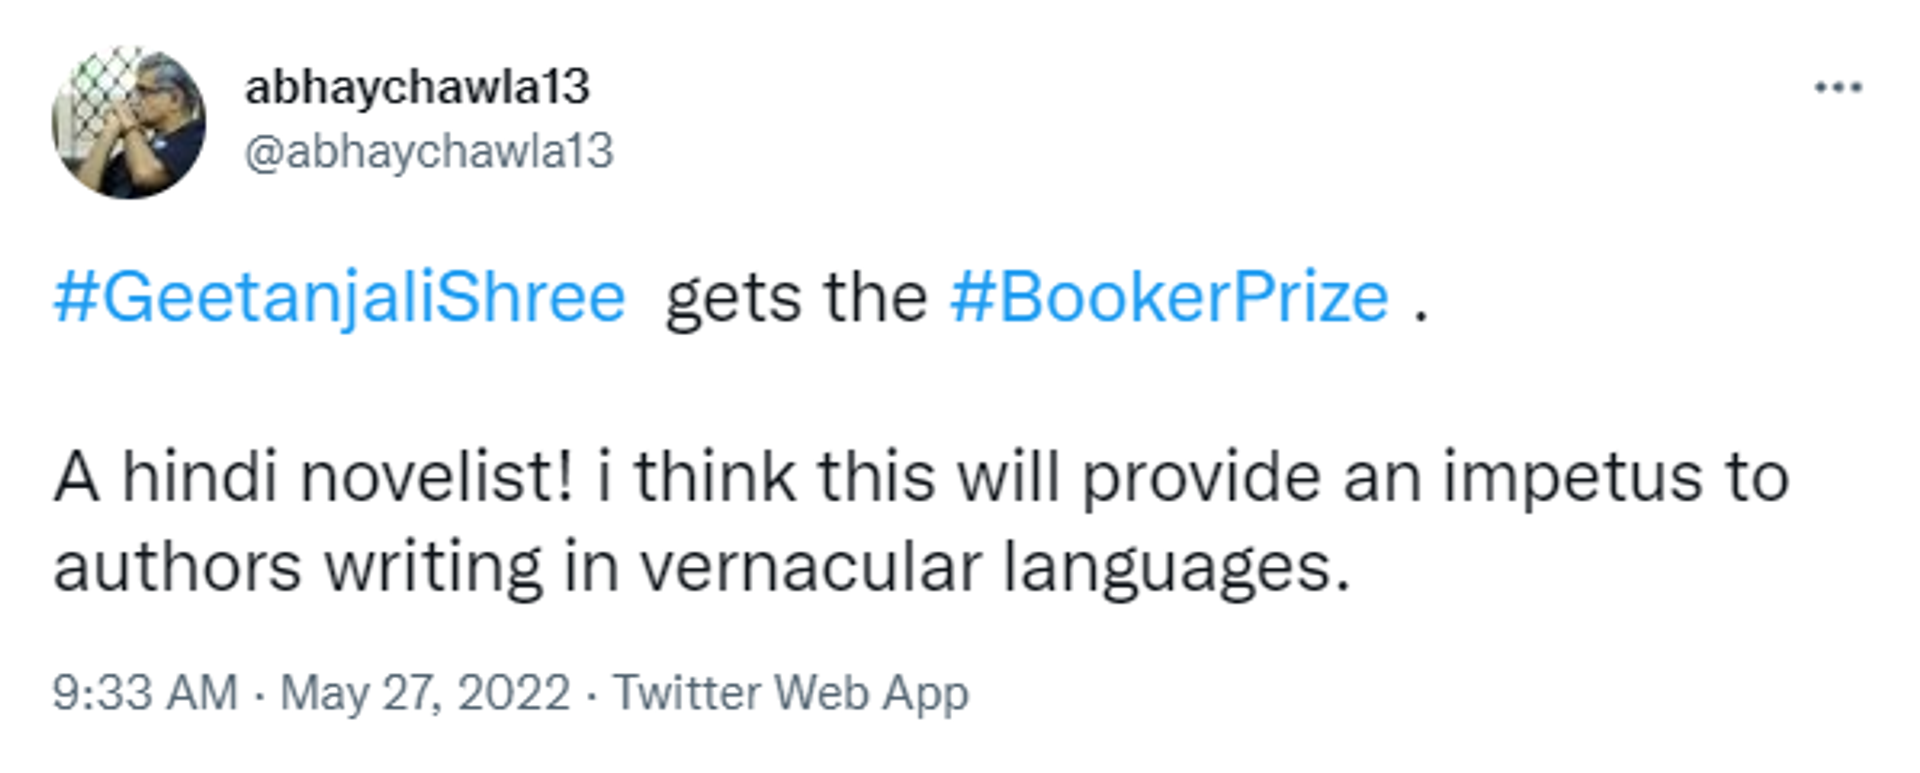 Twitterati Praises Geetanjali Shree for Winning International Booker Prize - Sputnik International, 1920, 27.05.2022